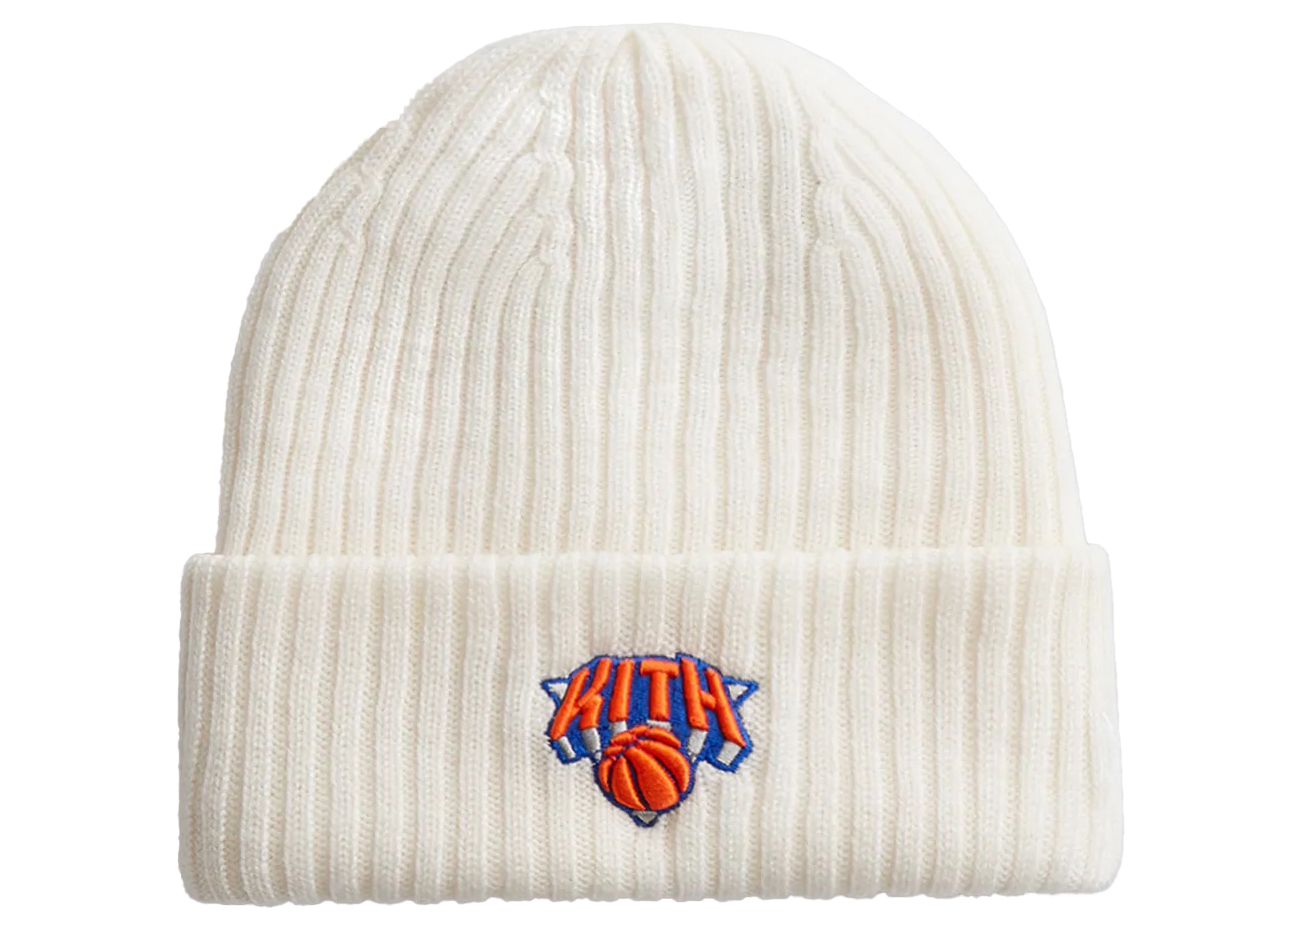 Kith New York Knicks Beanie Sandrift